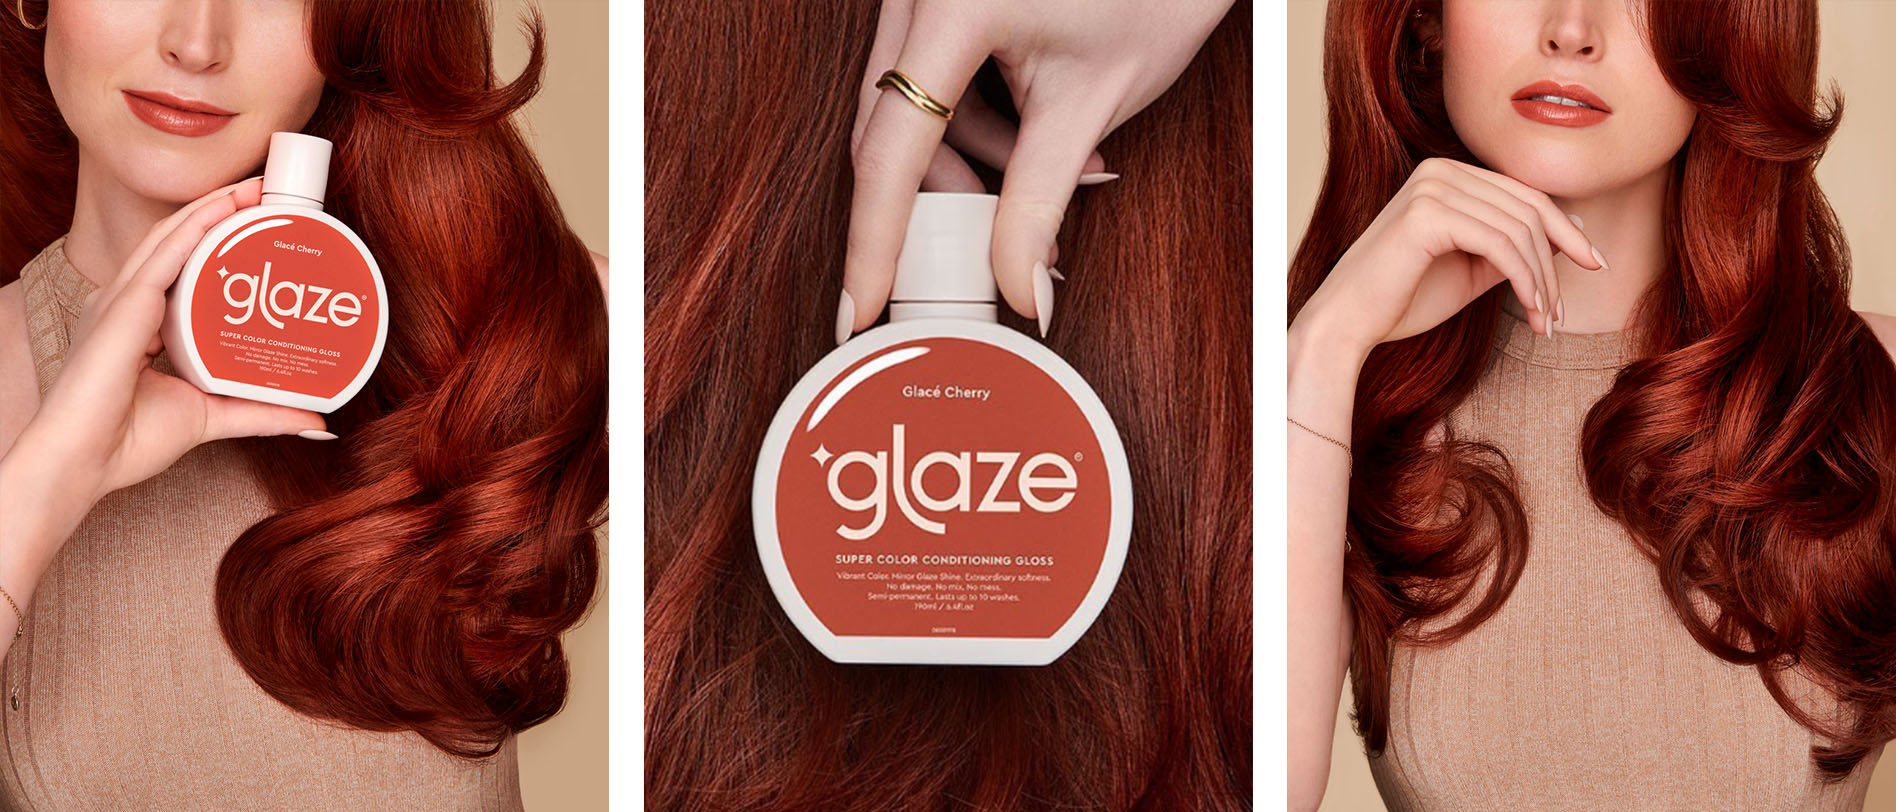 Sandra Reynolds model Amy showcasing Glaze product